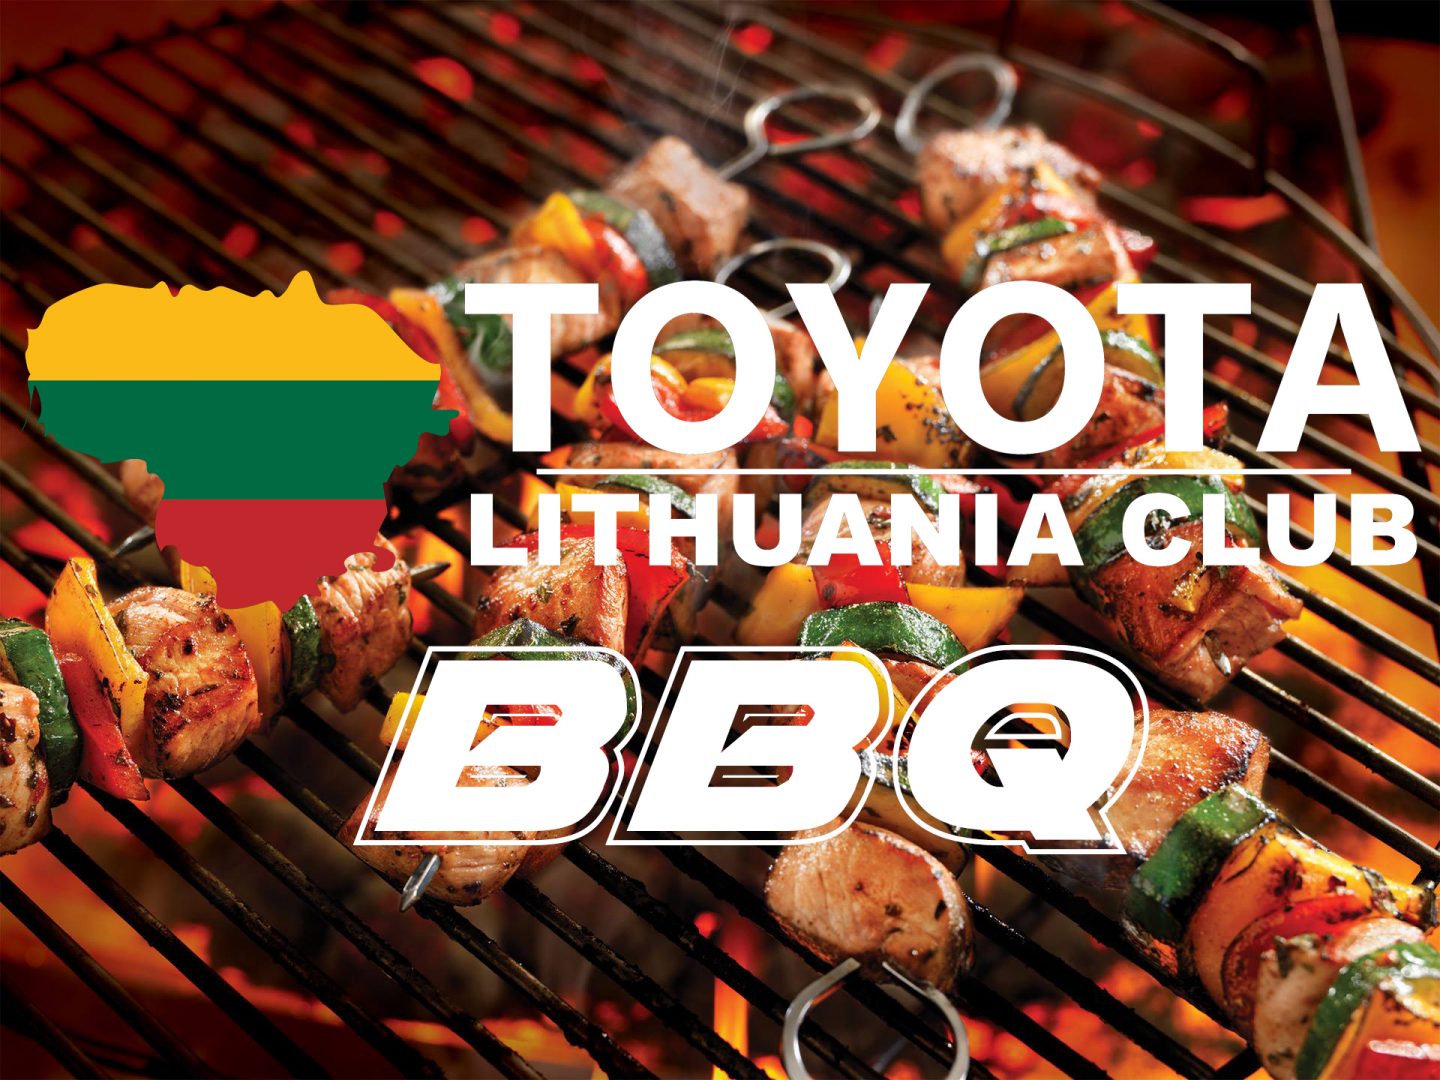 Toyota Lithuania Club BBQ